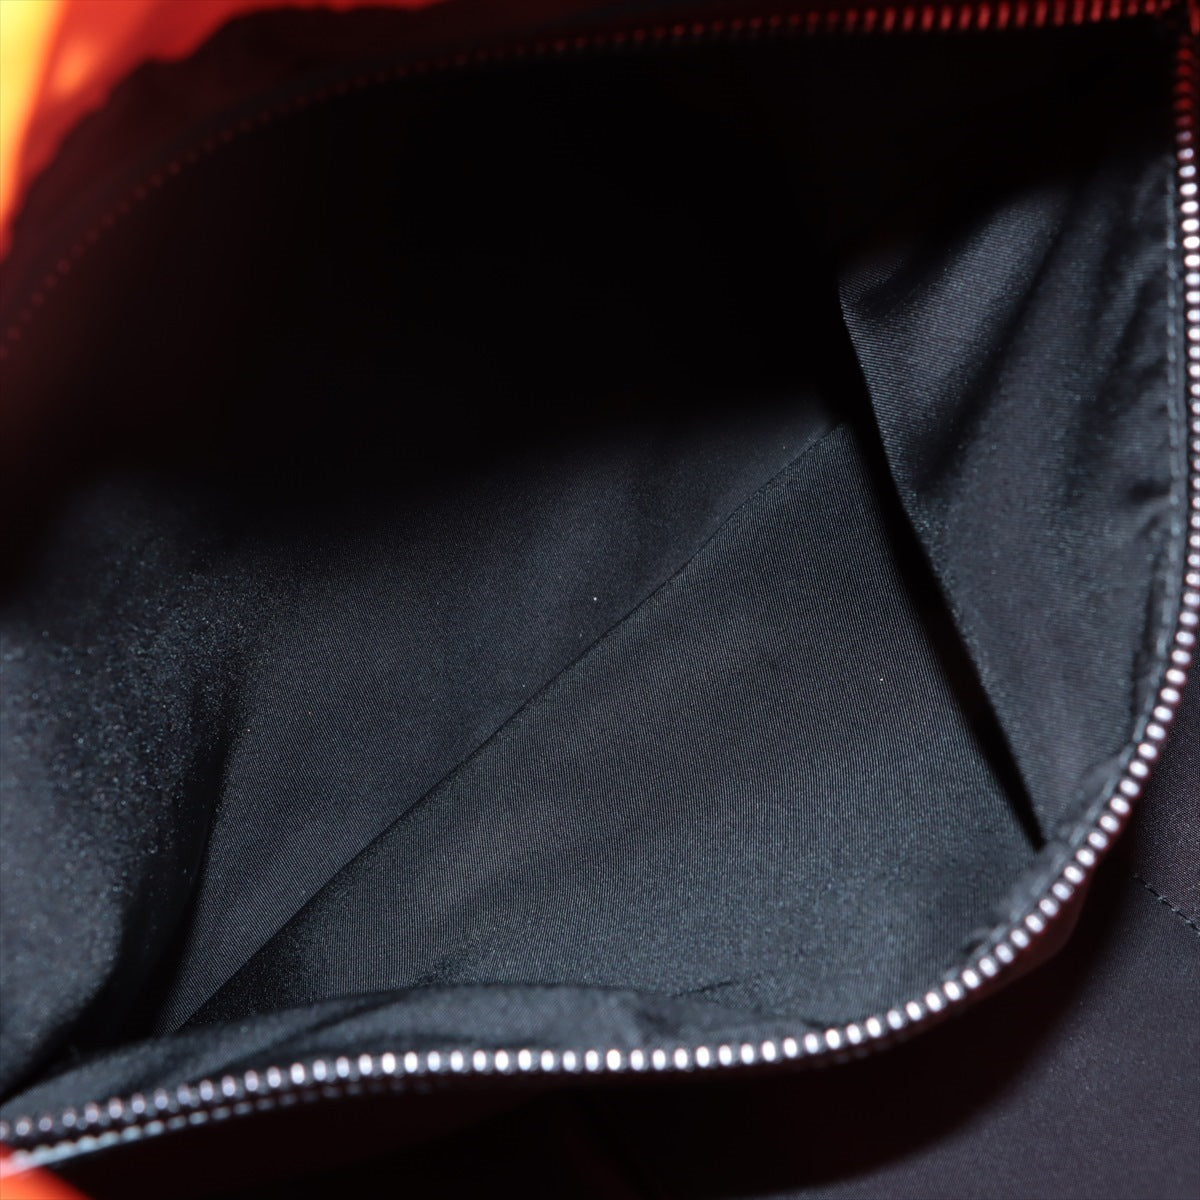 Dolce & Gabbana Nylon x Leather 2WAY Handbag Black